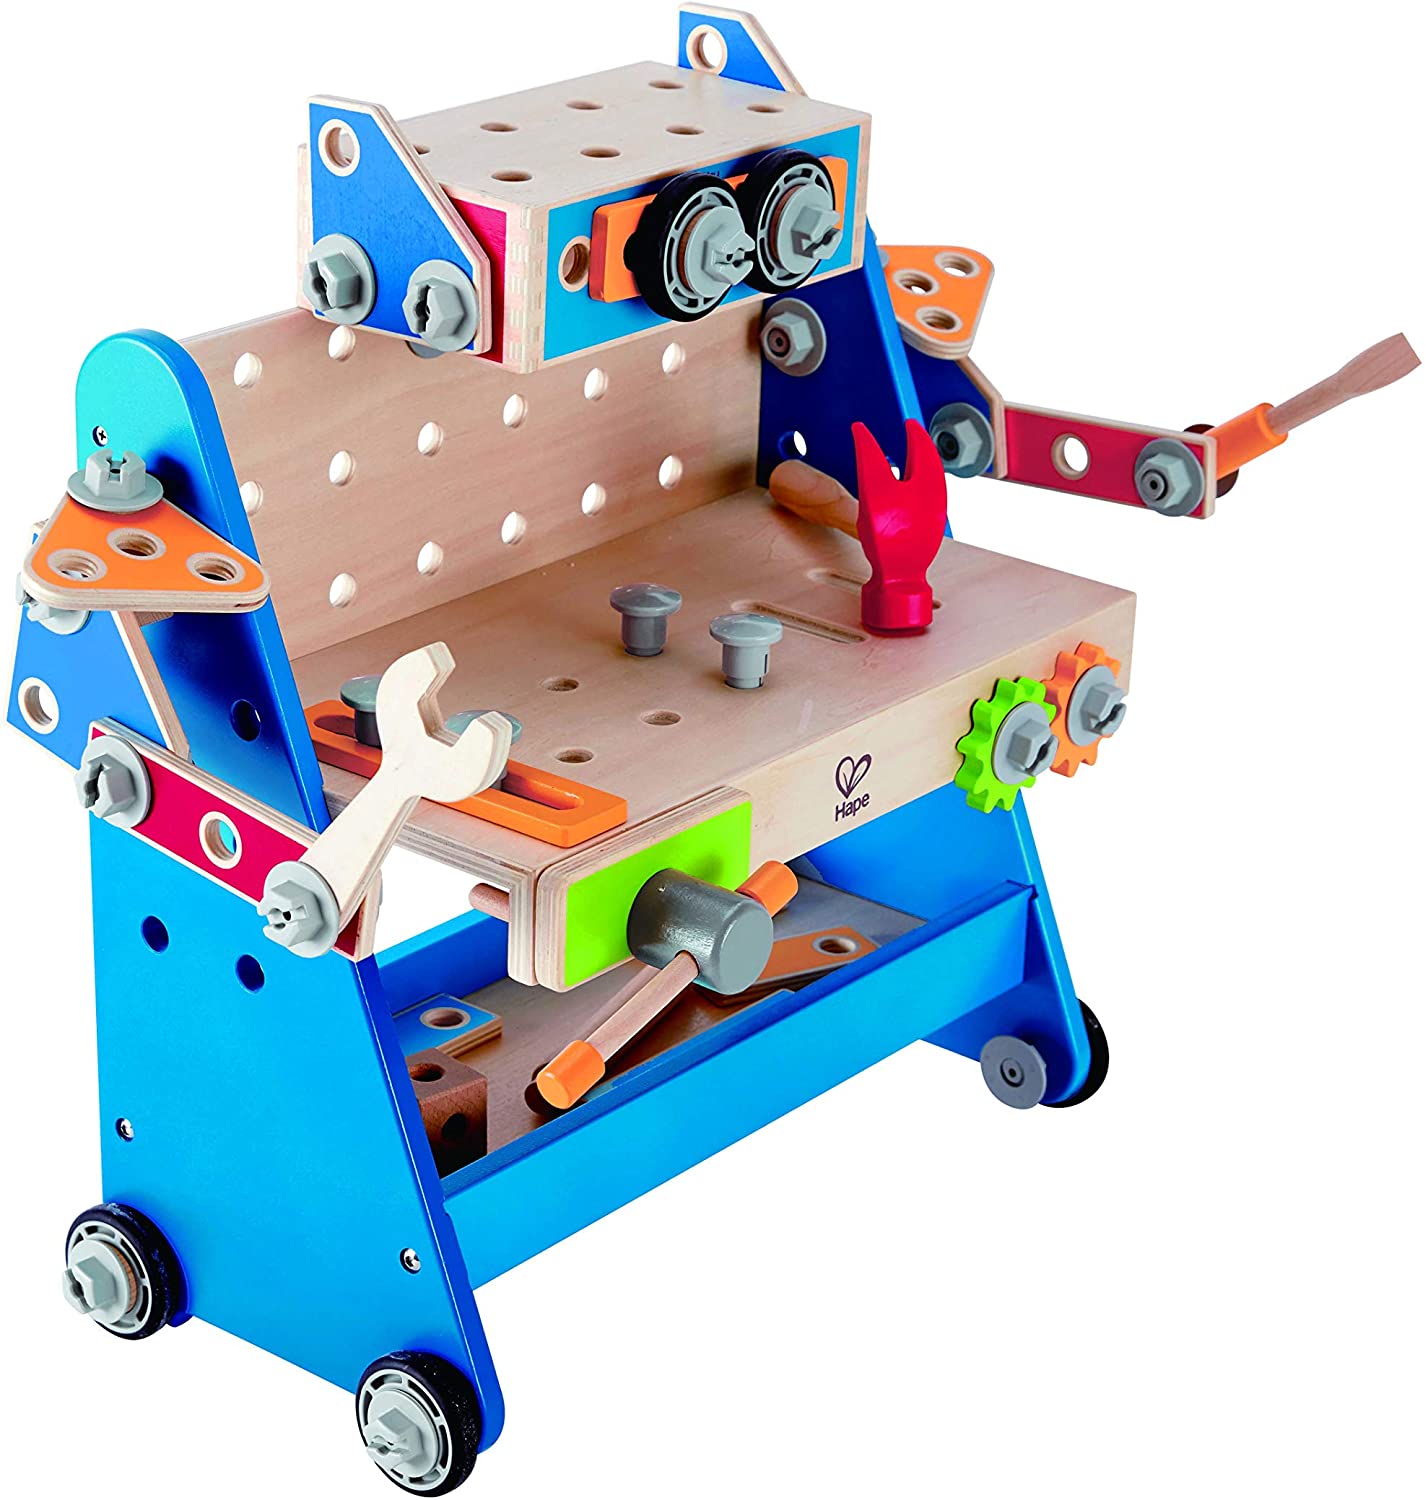 Hape Build a Robot Wooden Tool Workbench